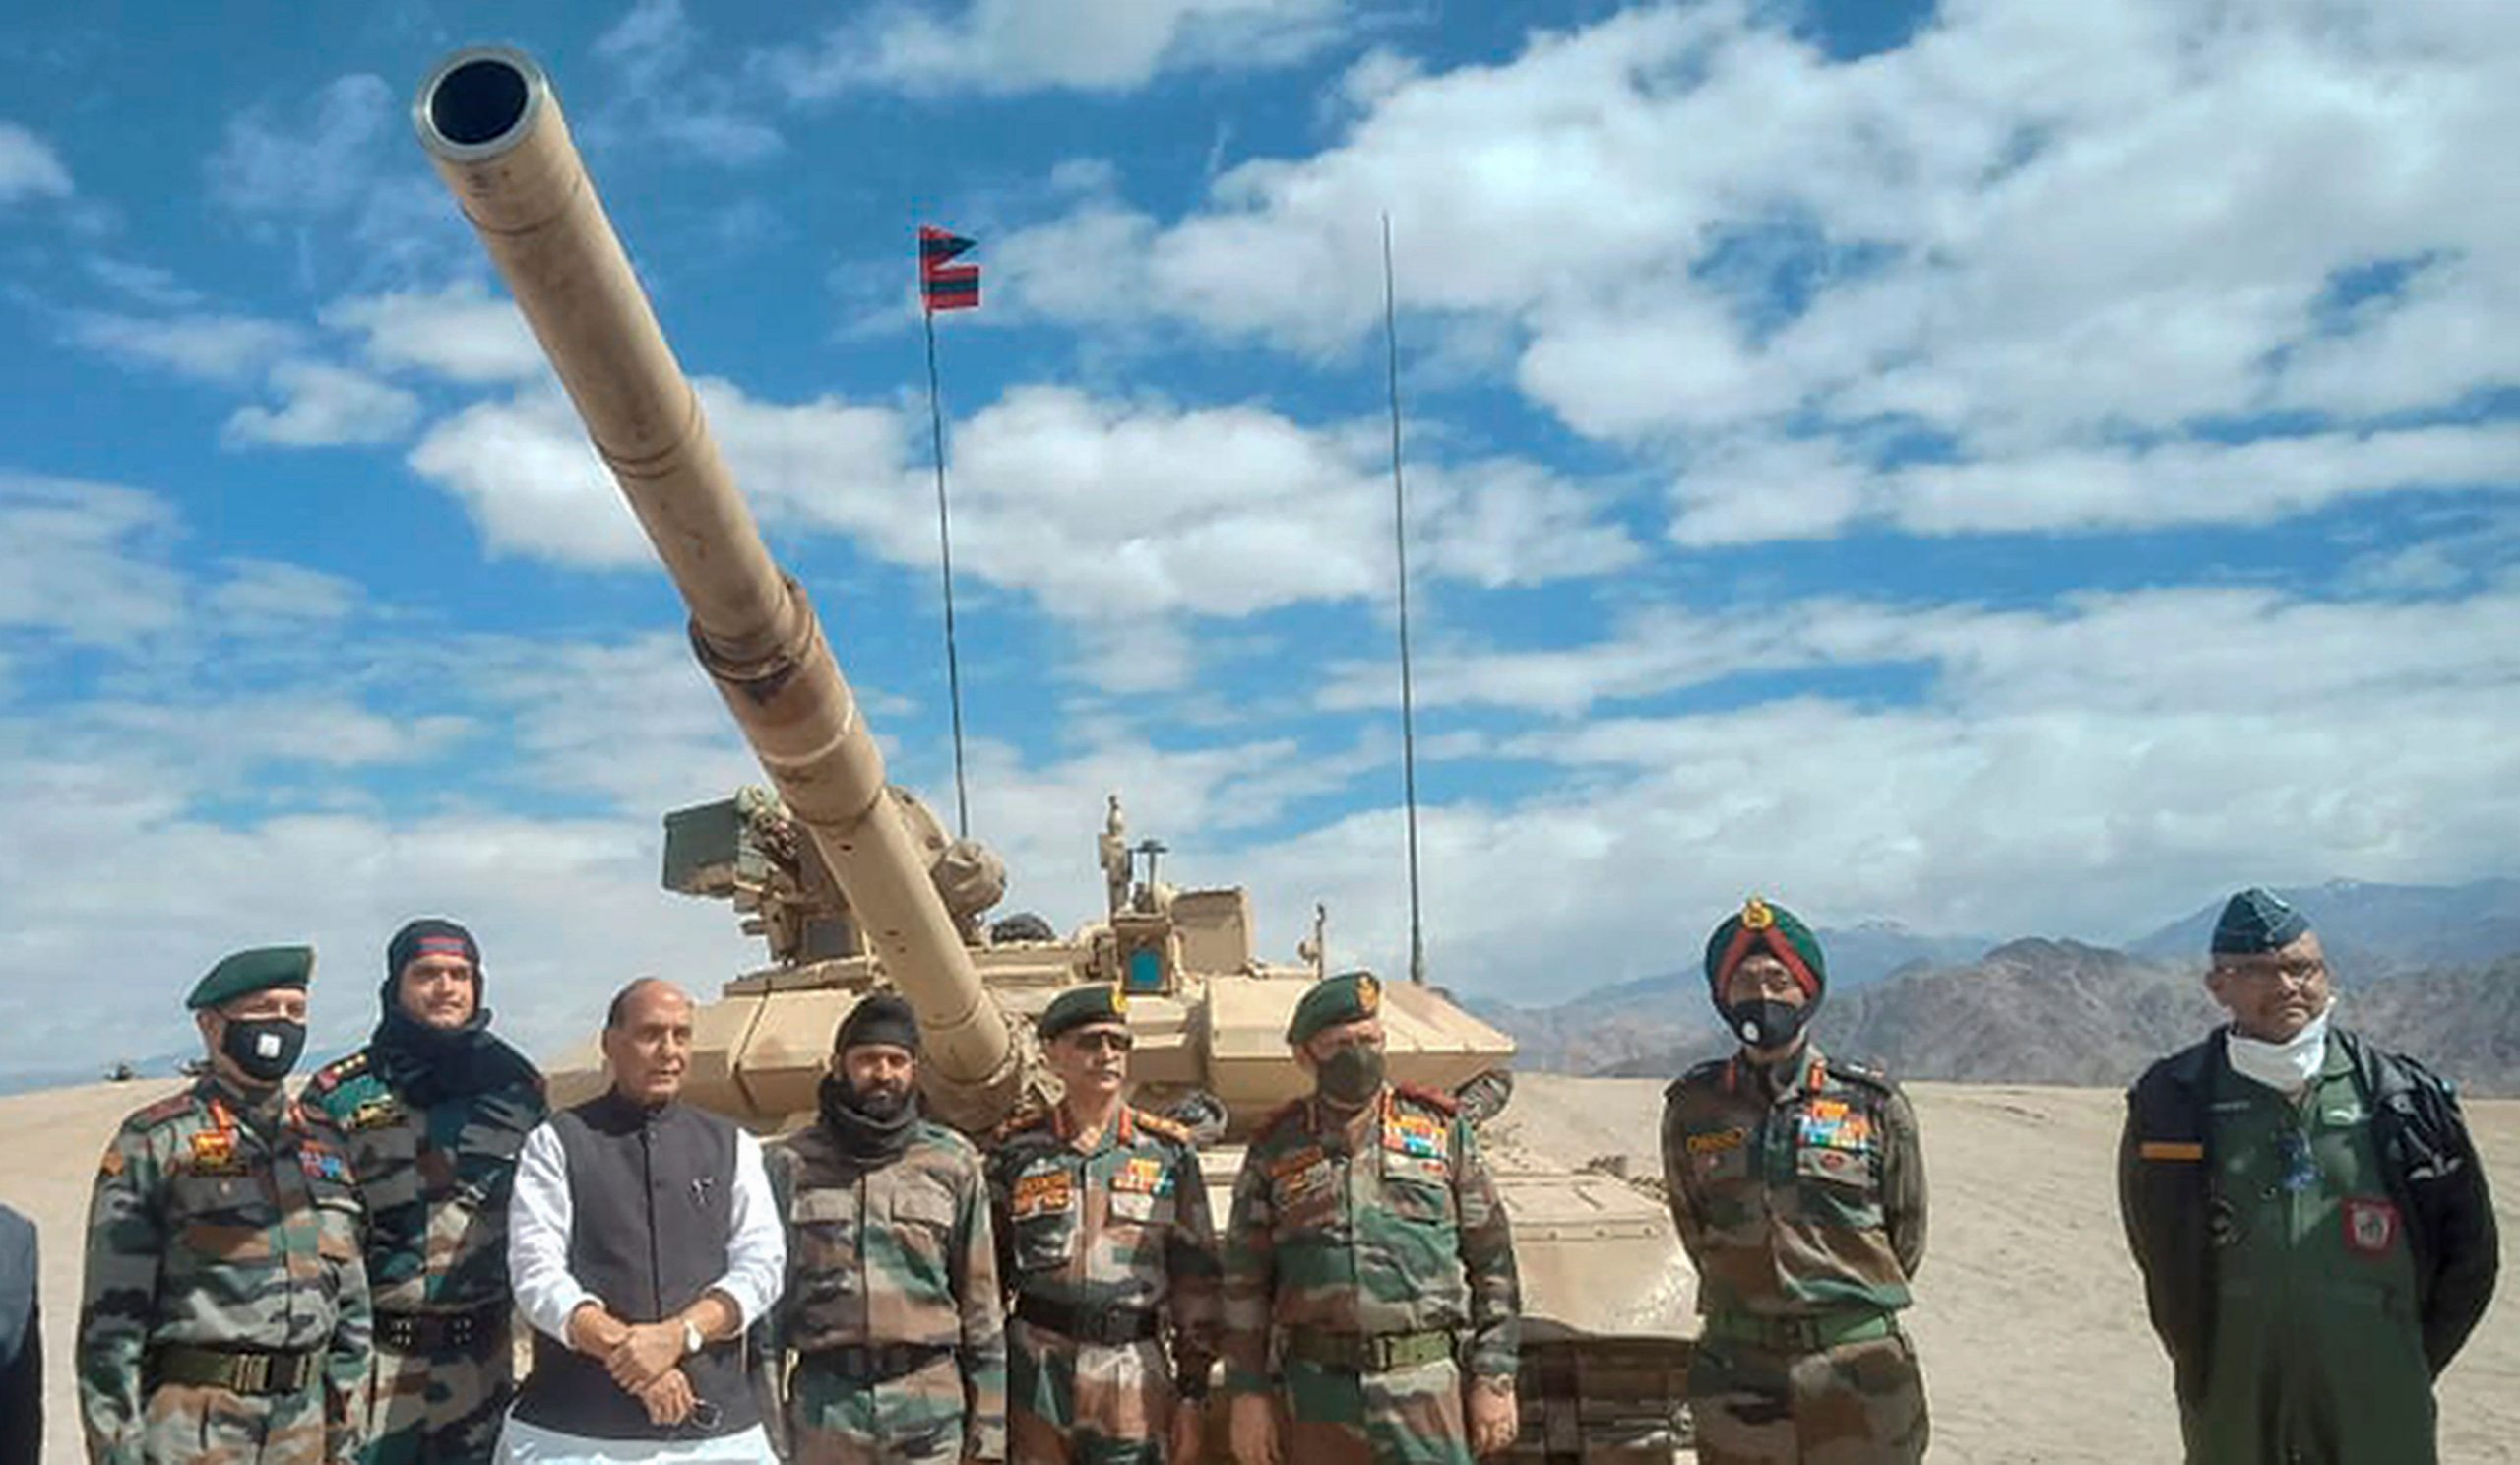 Watch: Defence minister Rajnath Singh inspects a Pika machine gun at Leh